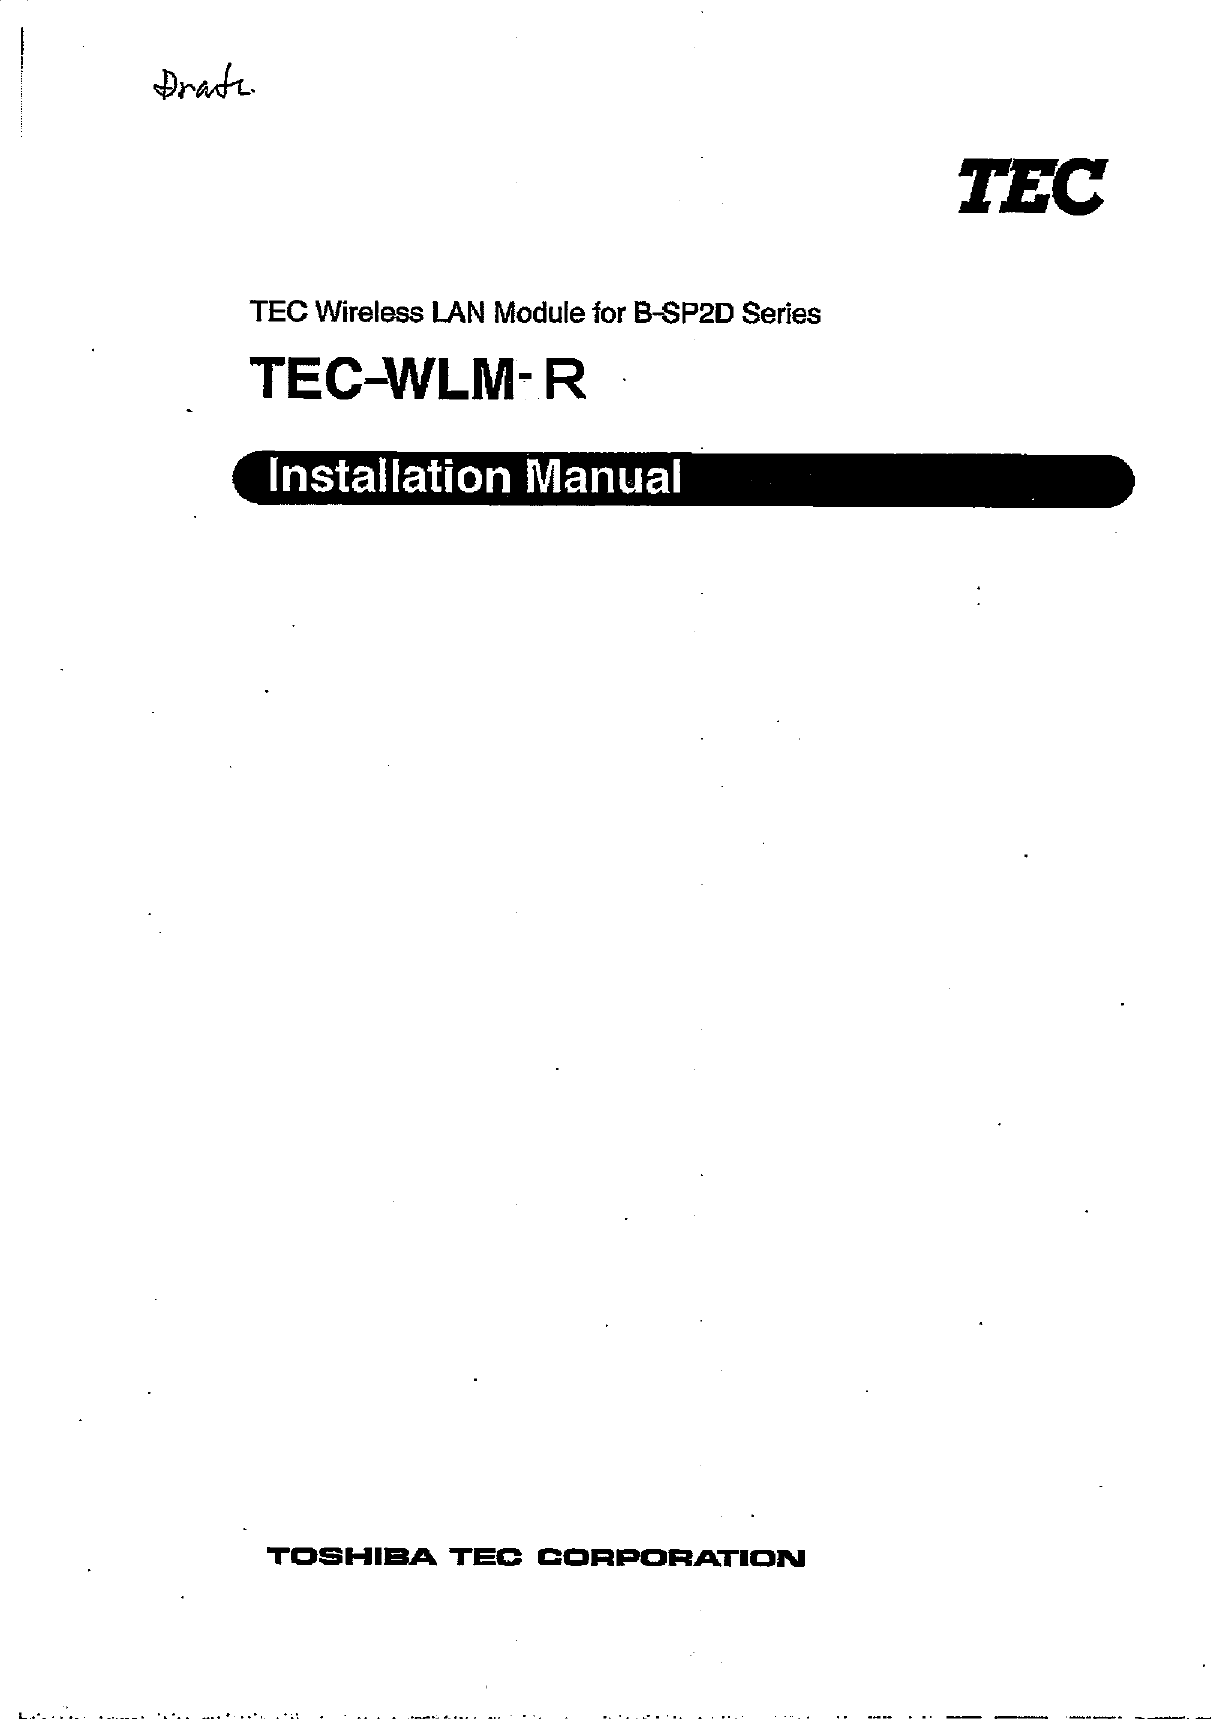 TEC Wireless IAN Module for B-SP2D Series TEC-WLM- R TOSHleA TEC CORPORATION 